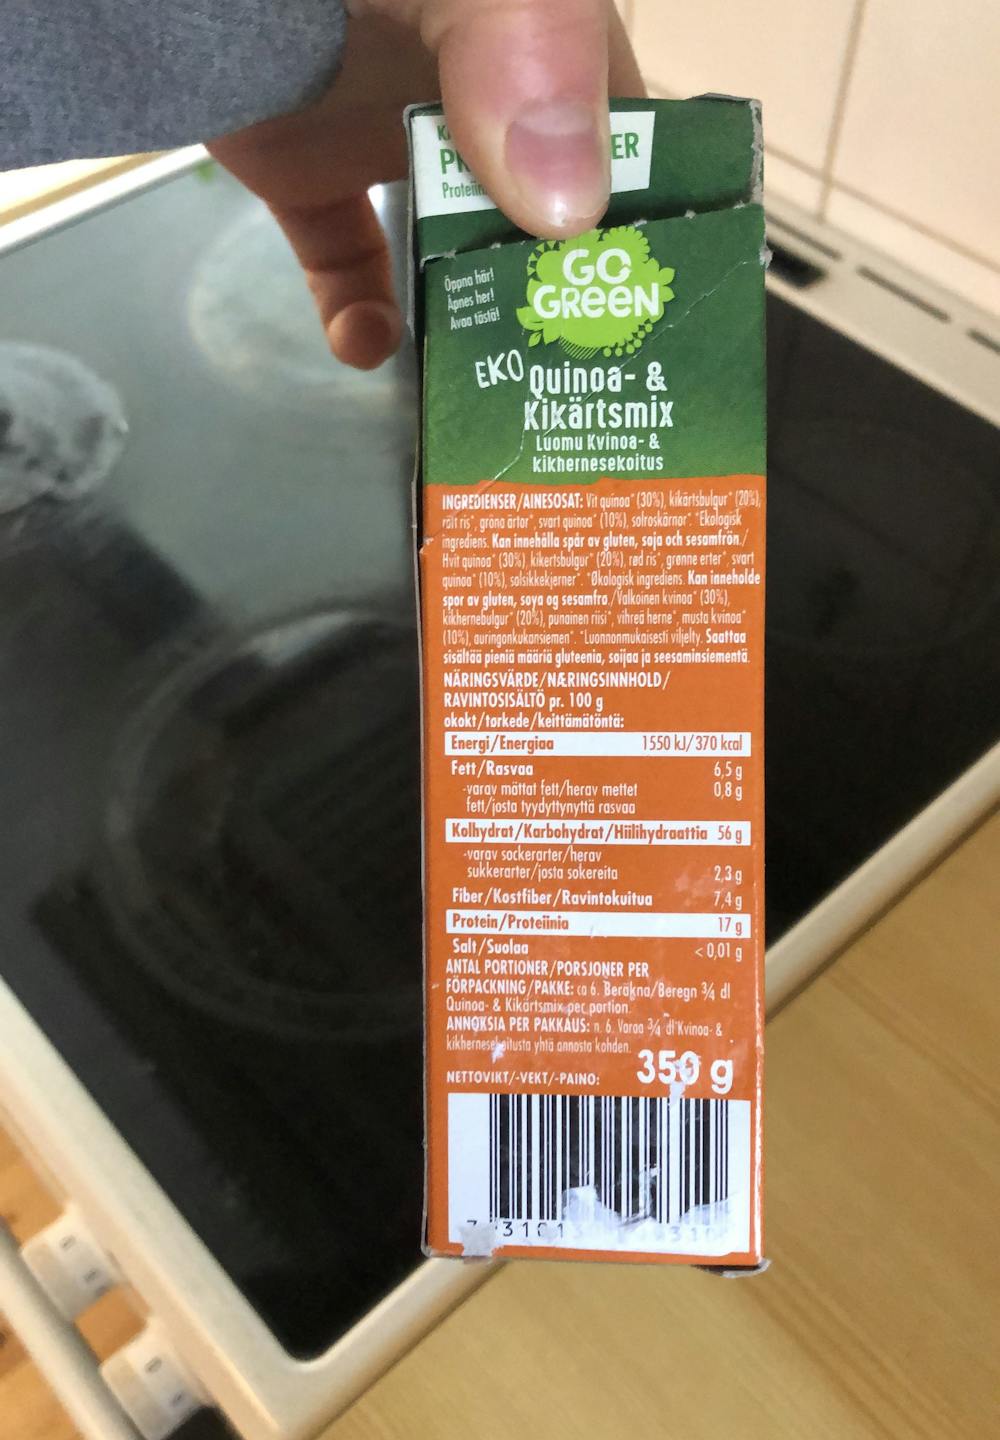 Ingredienslisten til Go Green Quinoa- & kikärtmix